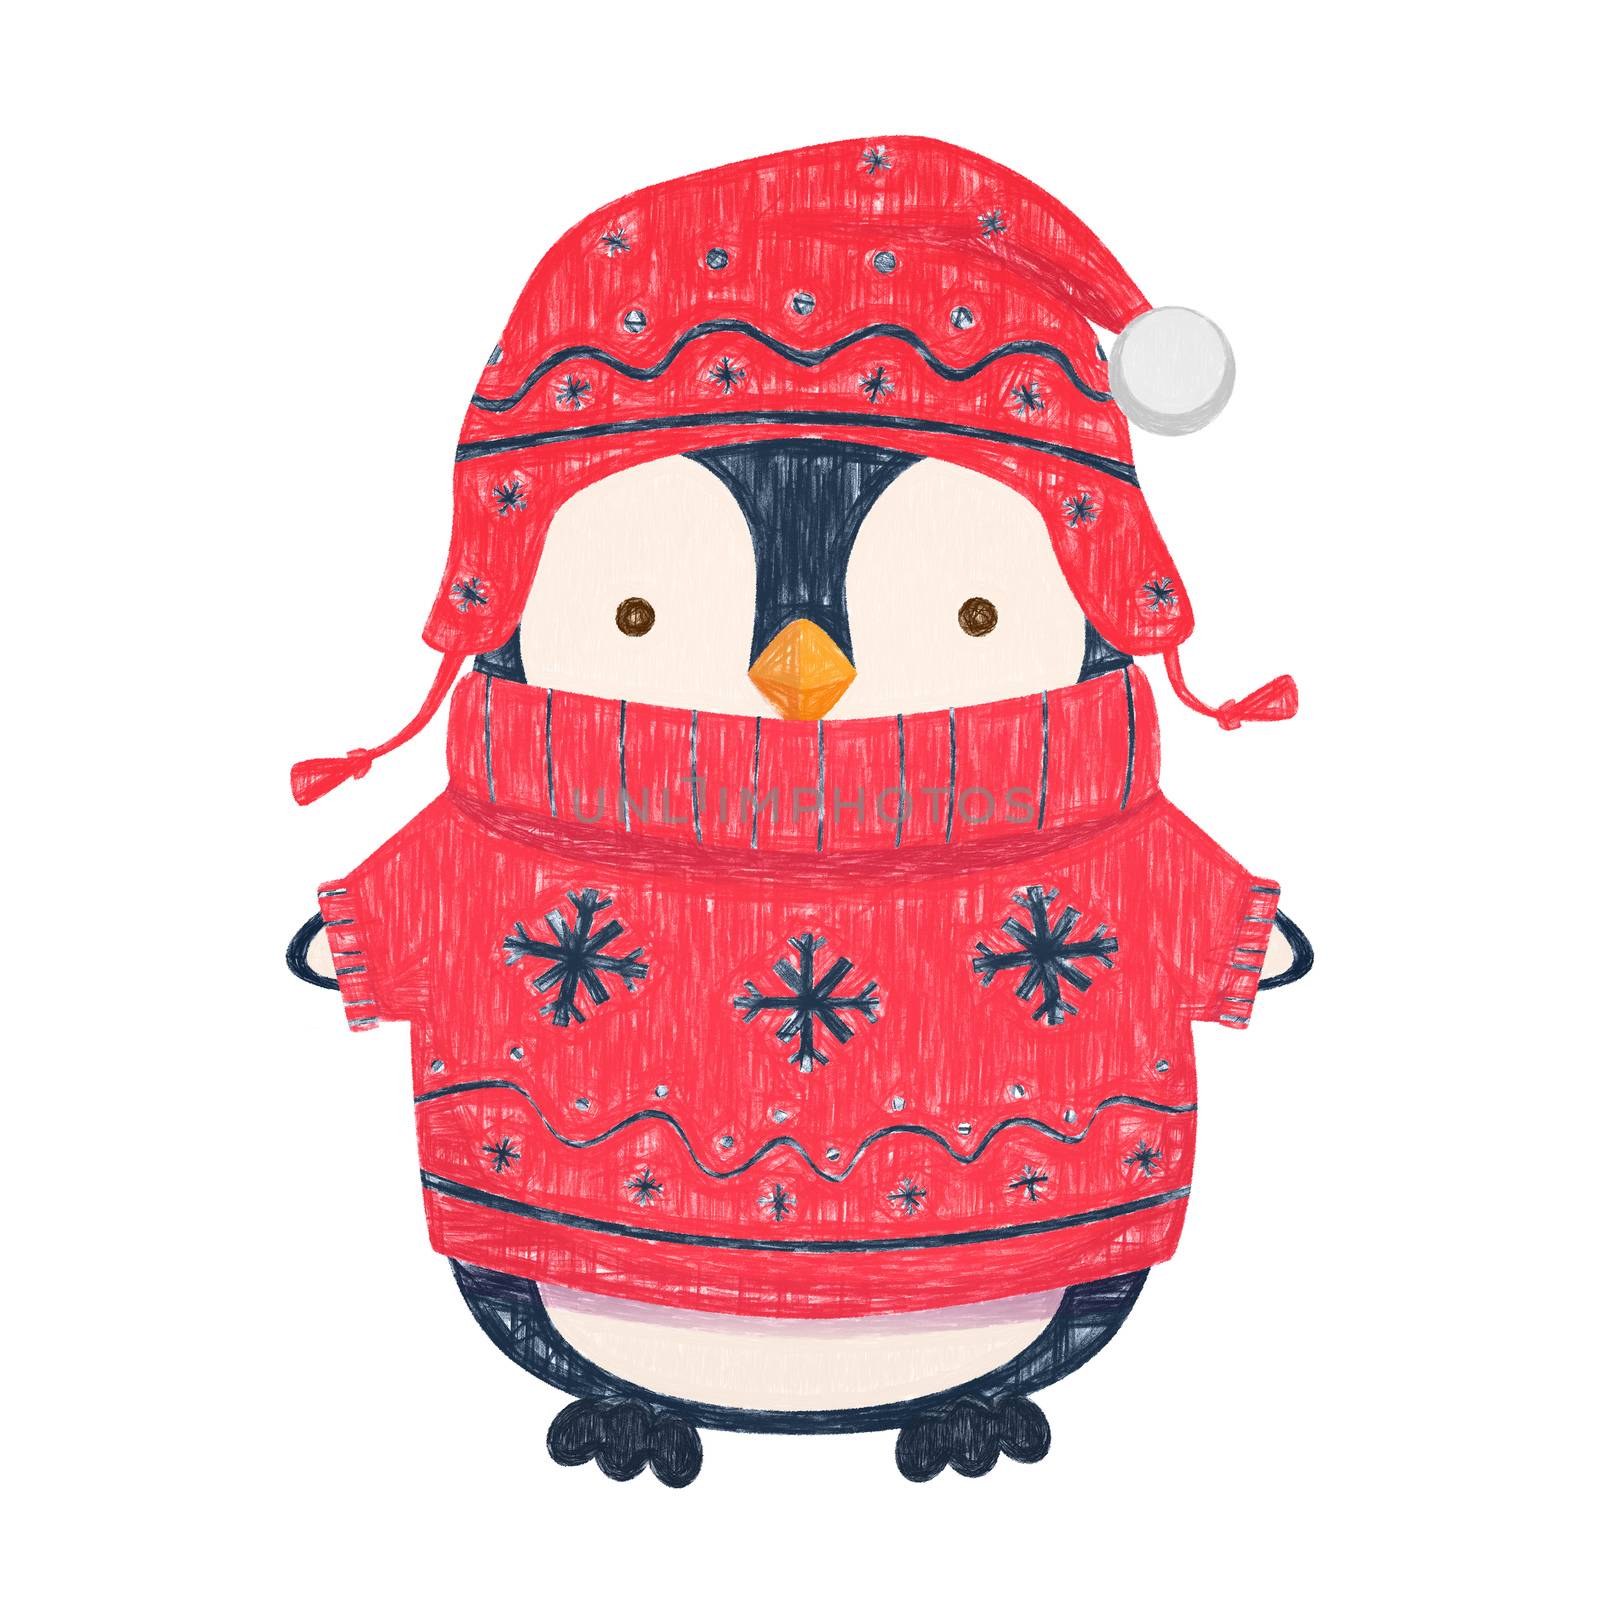 Penguin cartoon illustration. Penguin in hat and sweater